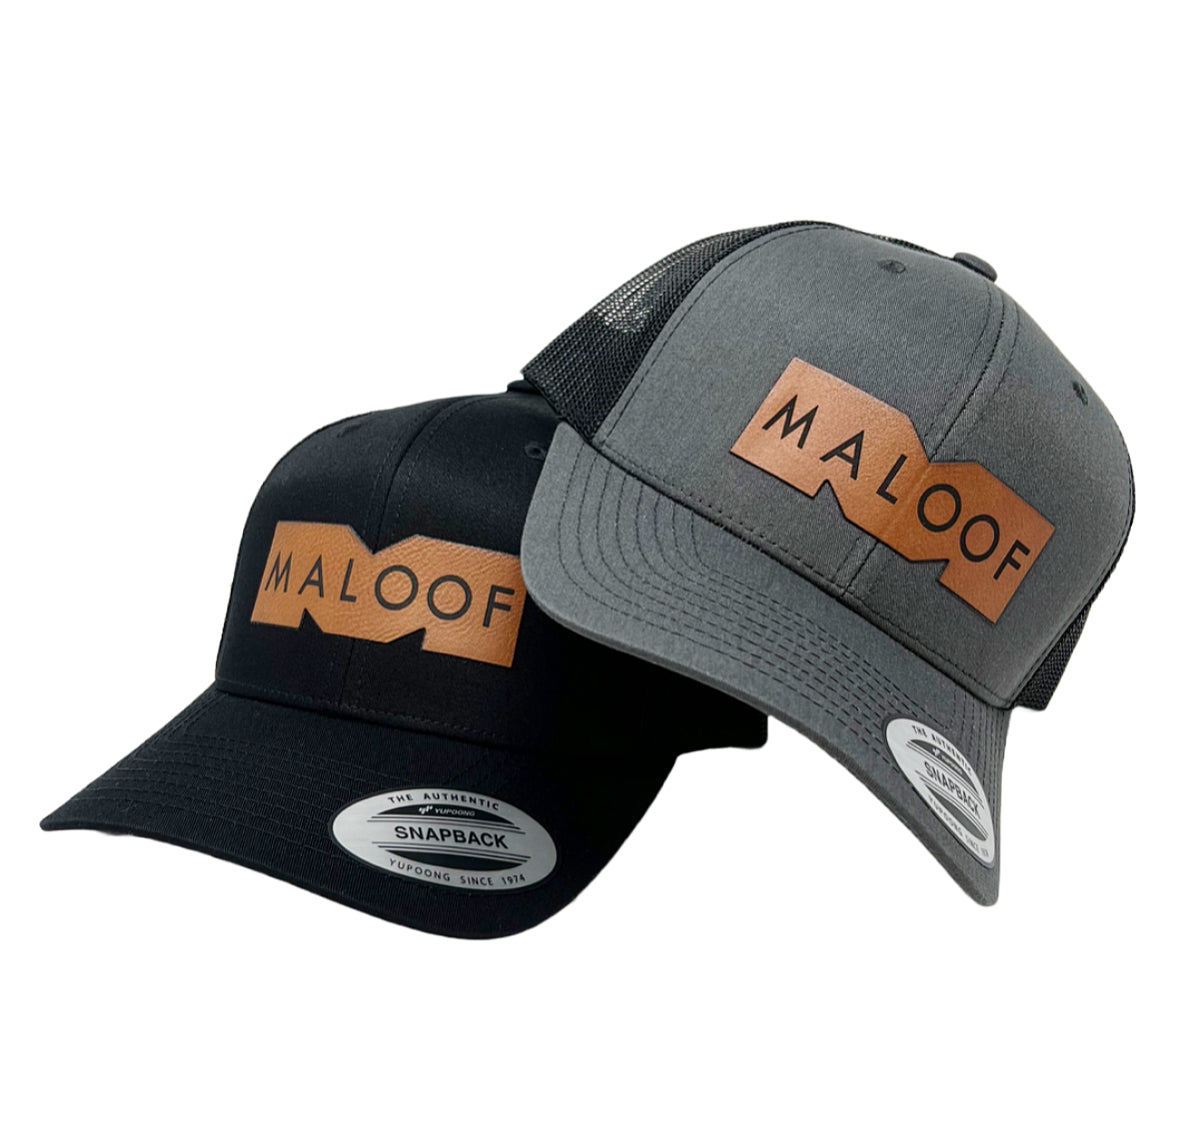 Maloof Logo Hat